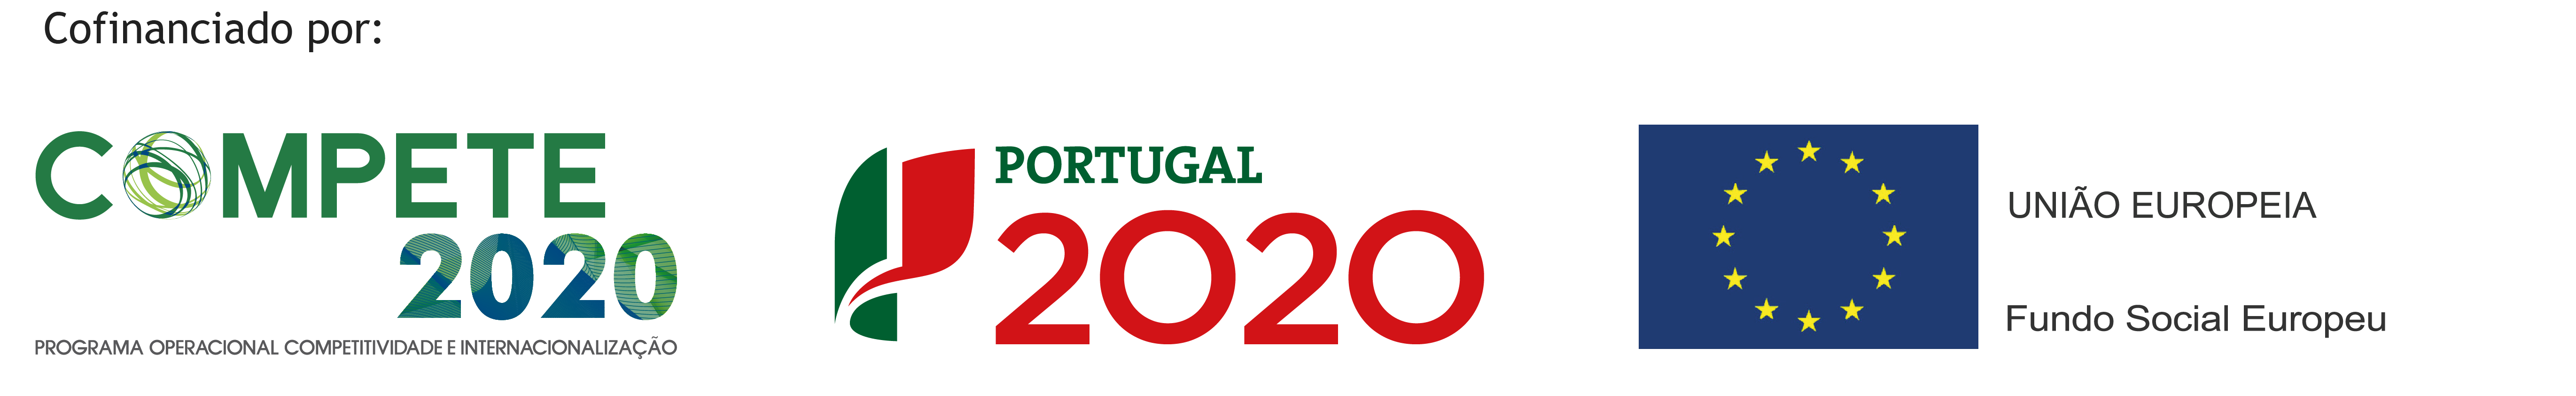 compte portugal 2020